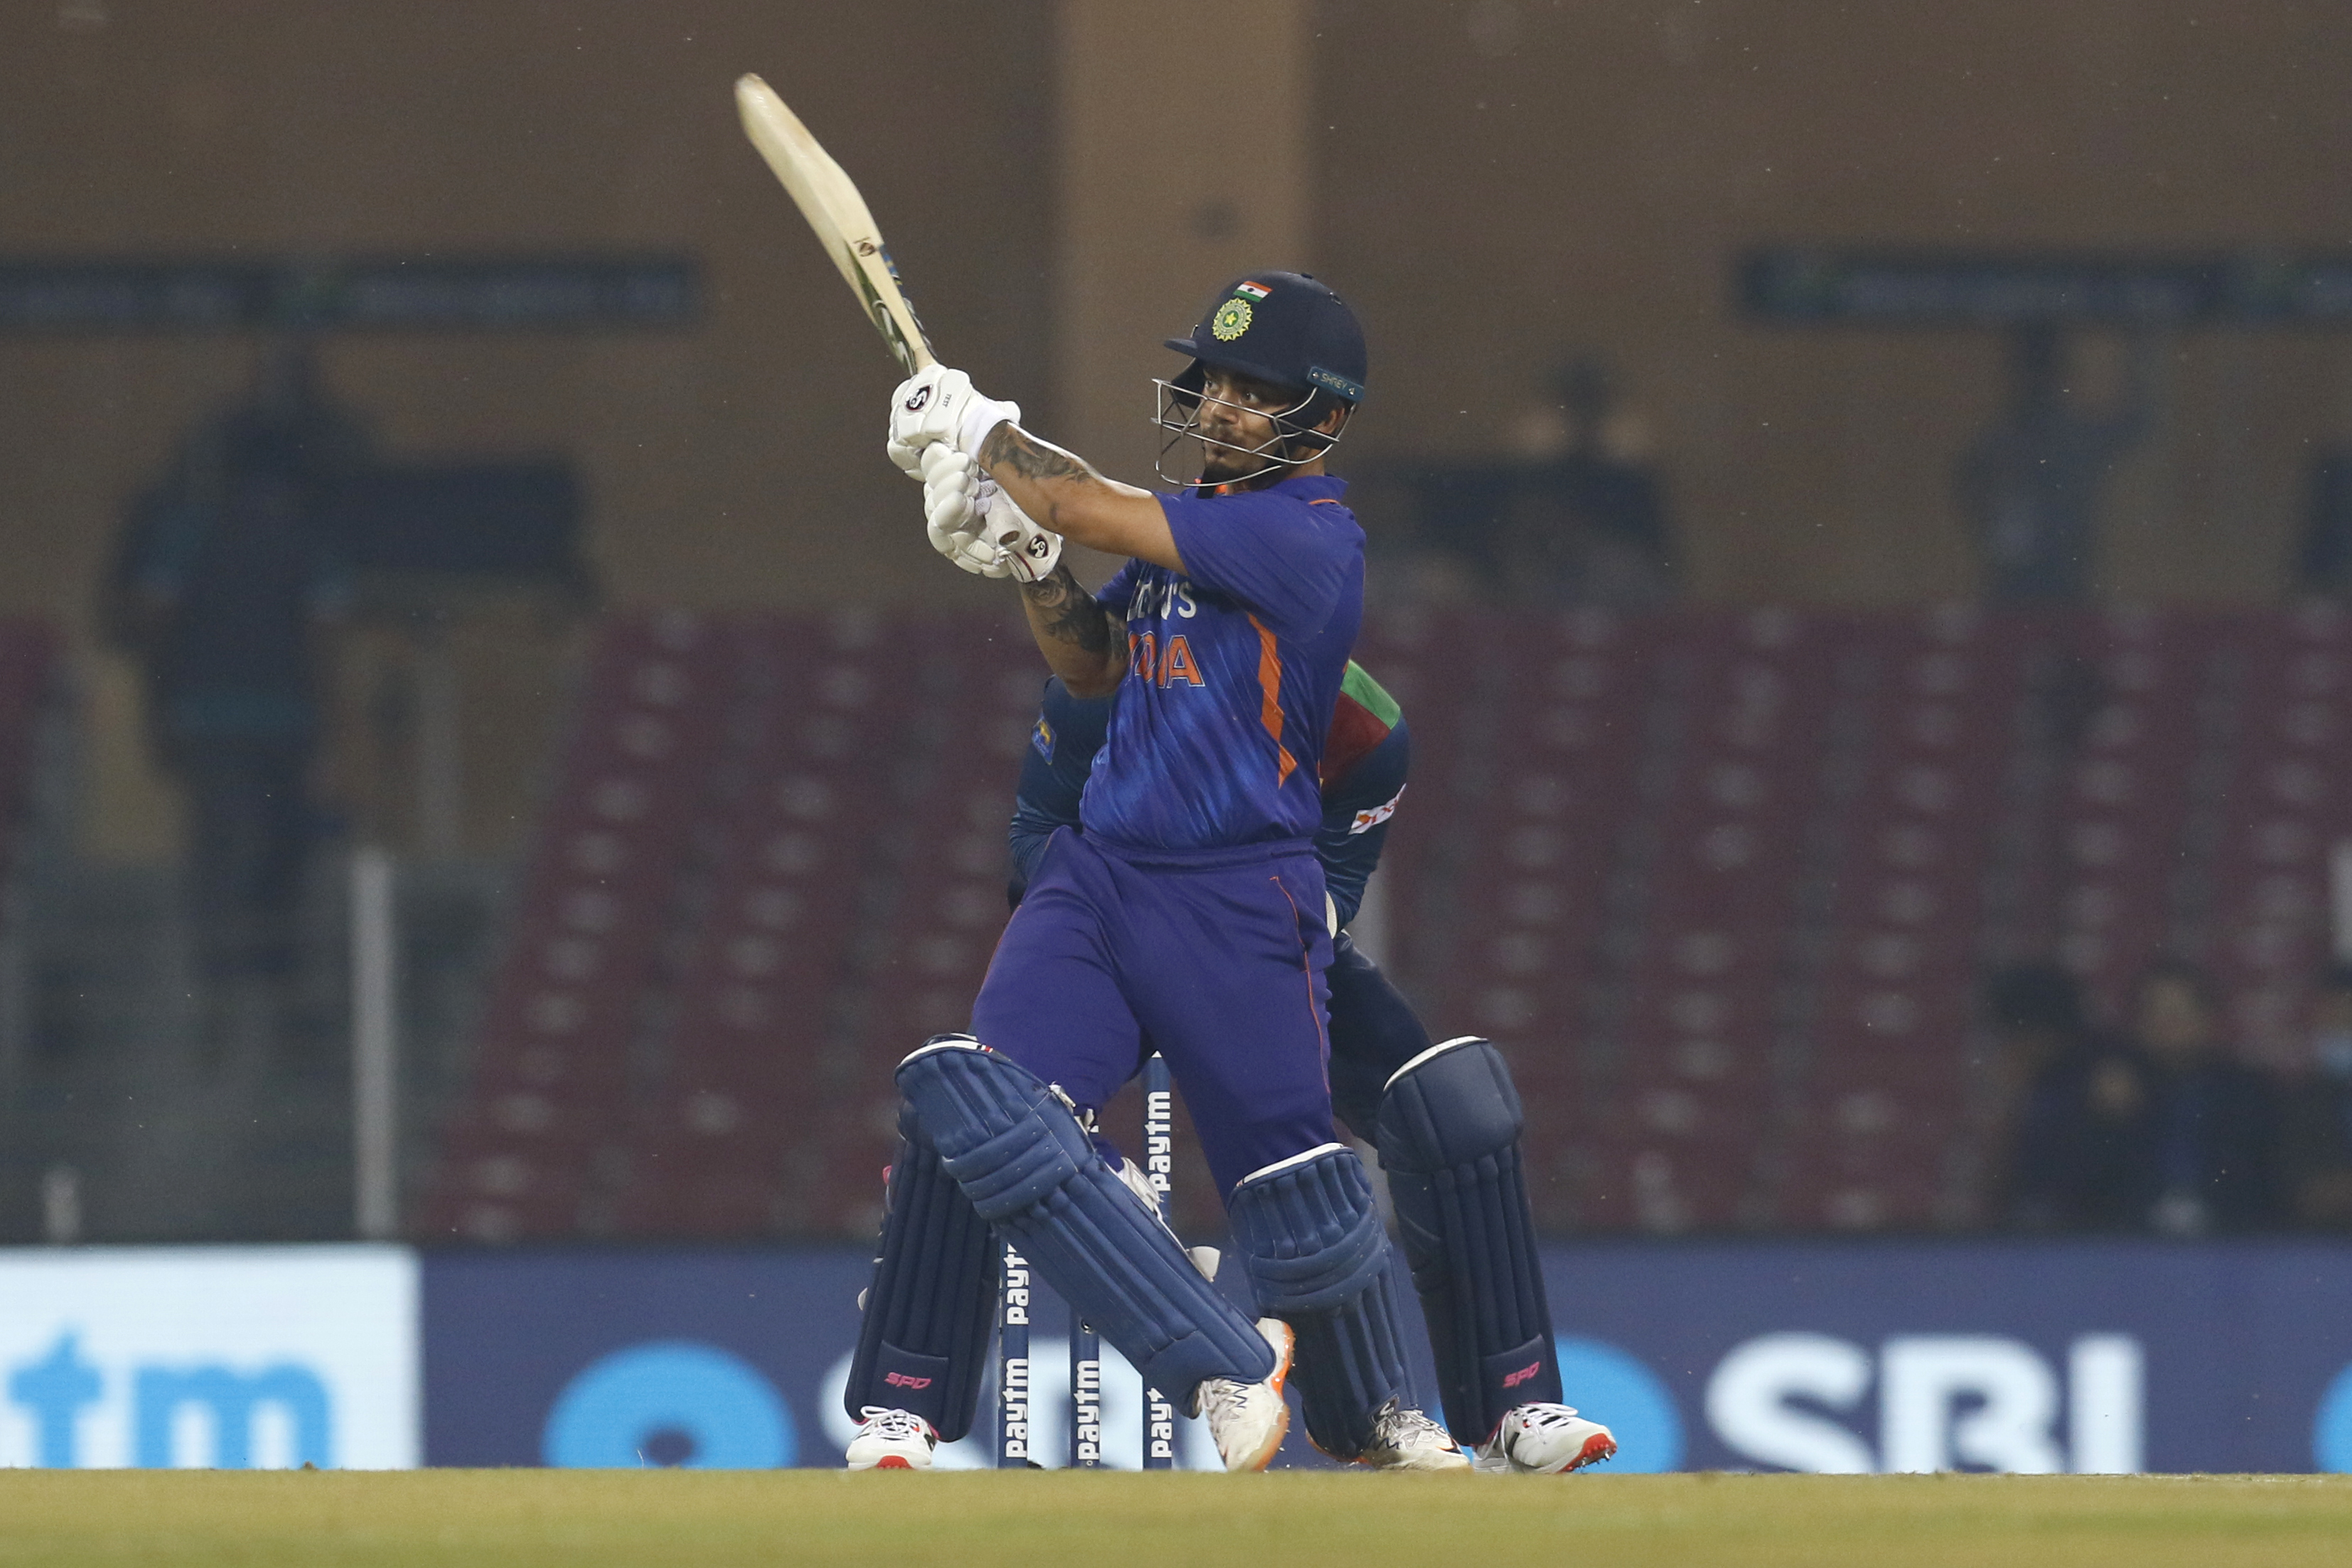 WATCH | Ishan Kishan suffers blow on helmet by Lahiru Kumara bouncer in second T20I vs Sri Lanka